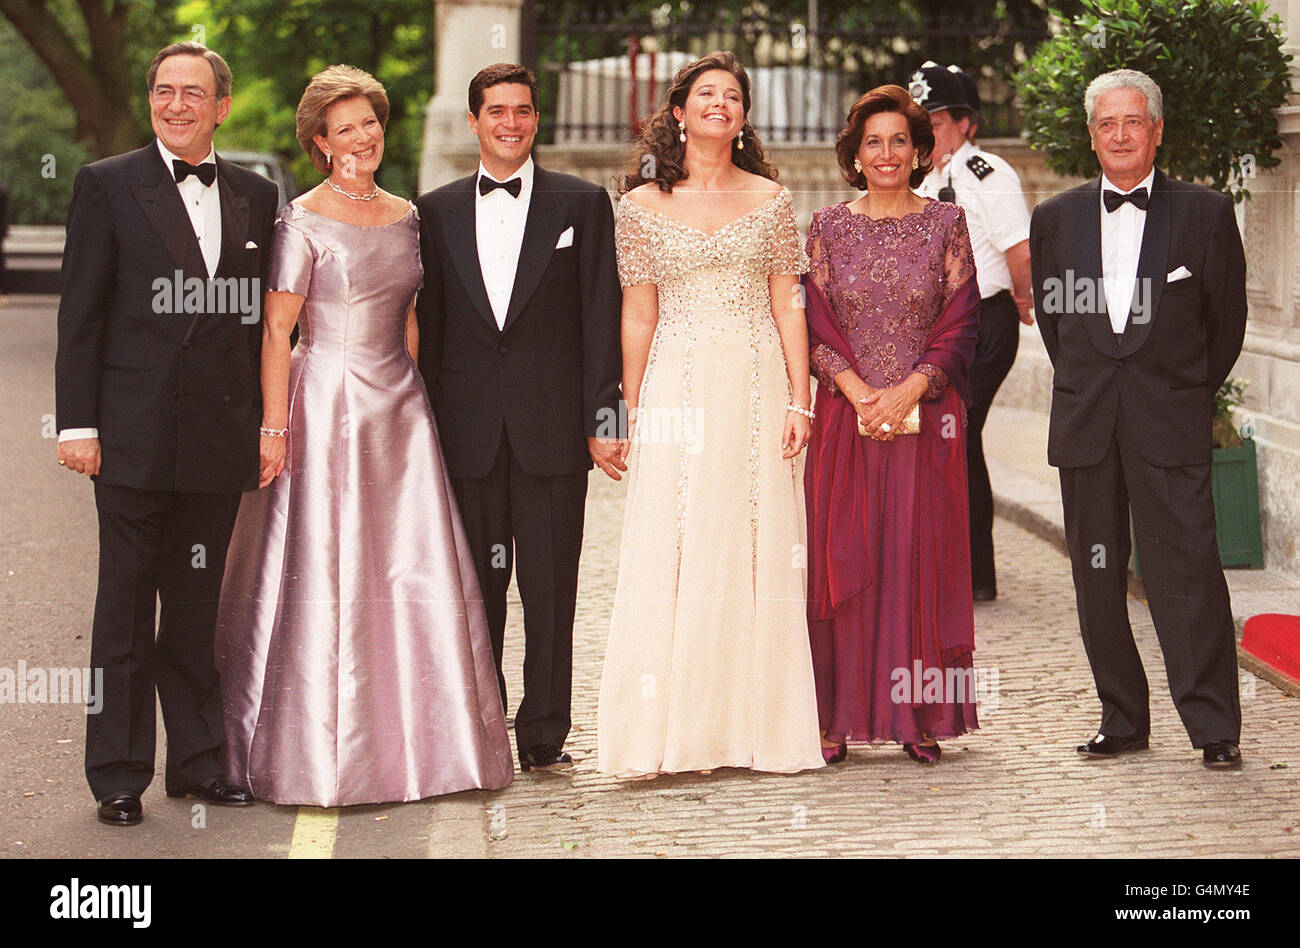 Greek royal family/gala ball Stock Photo